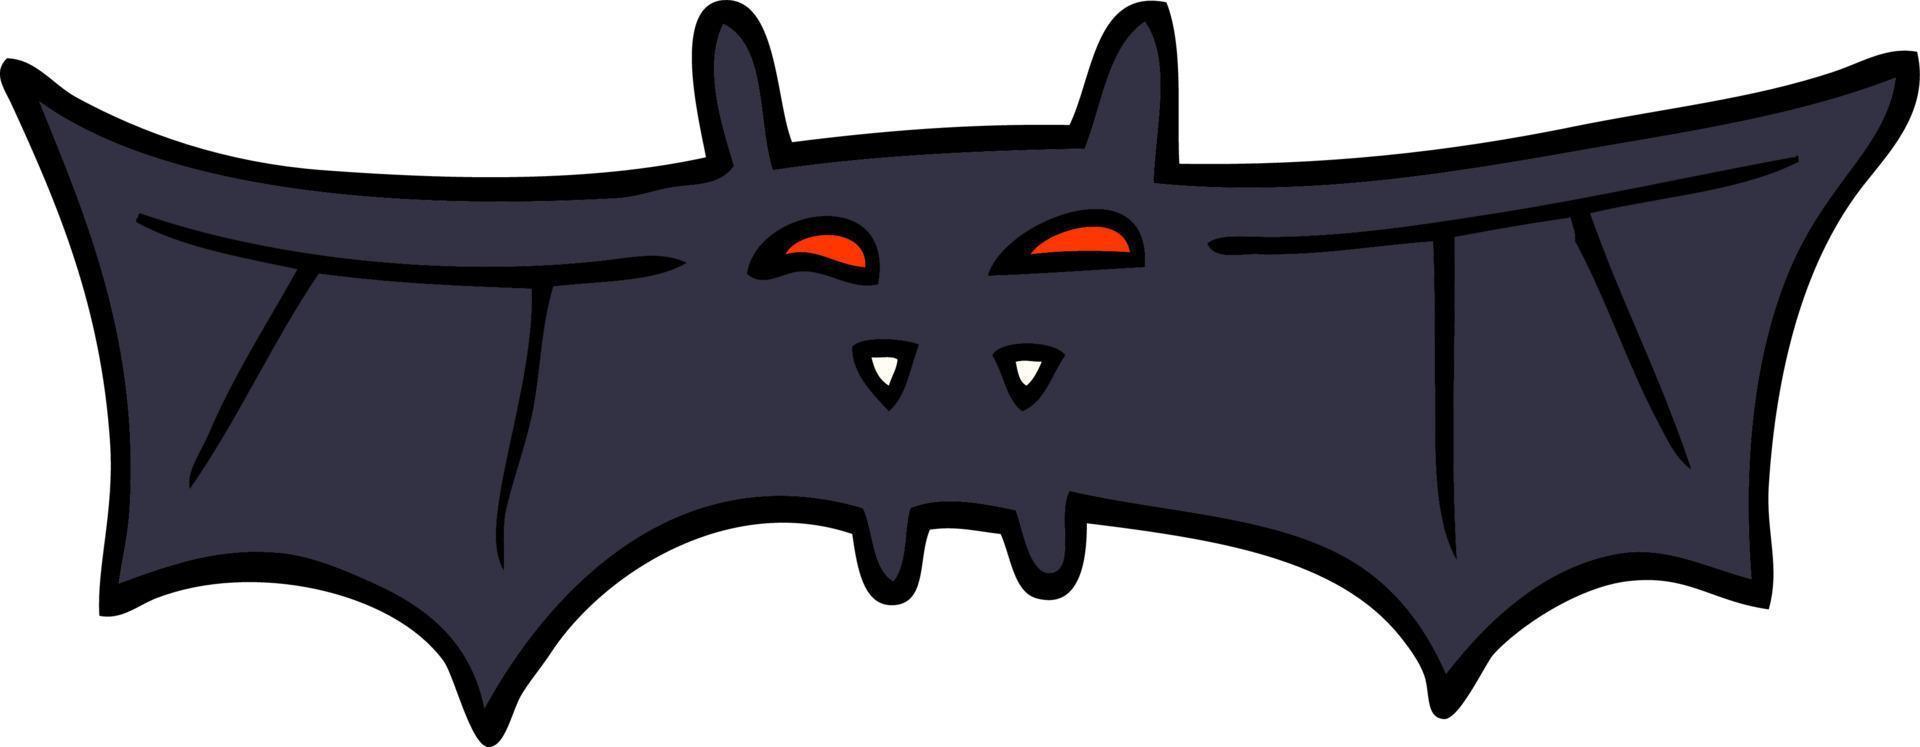 cartoon doodle vampire bat vector